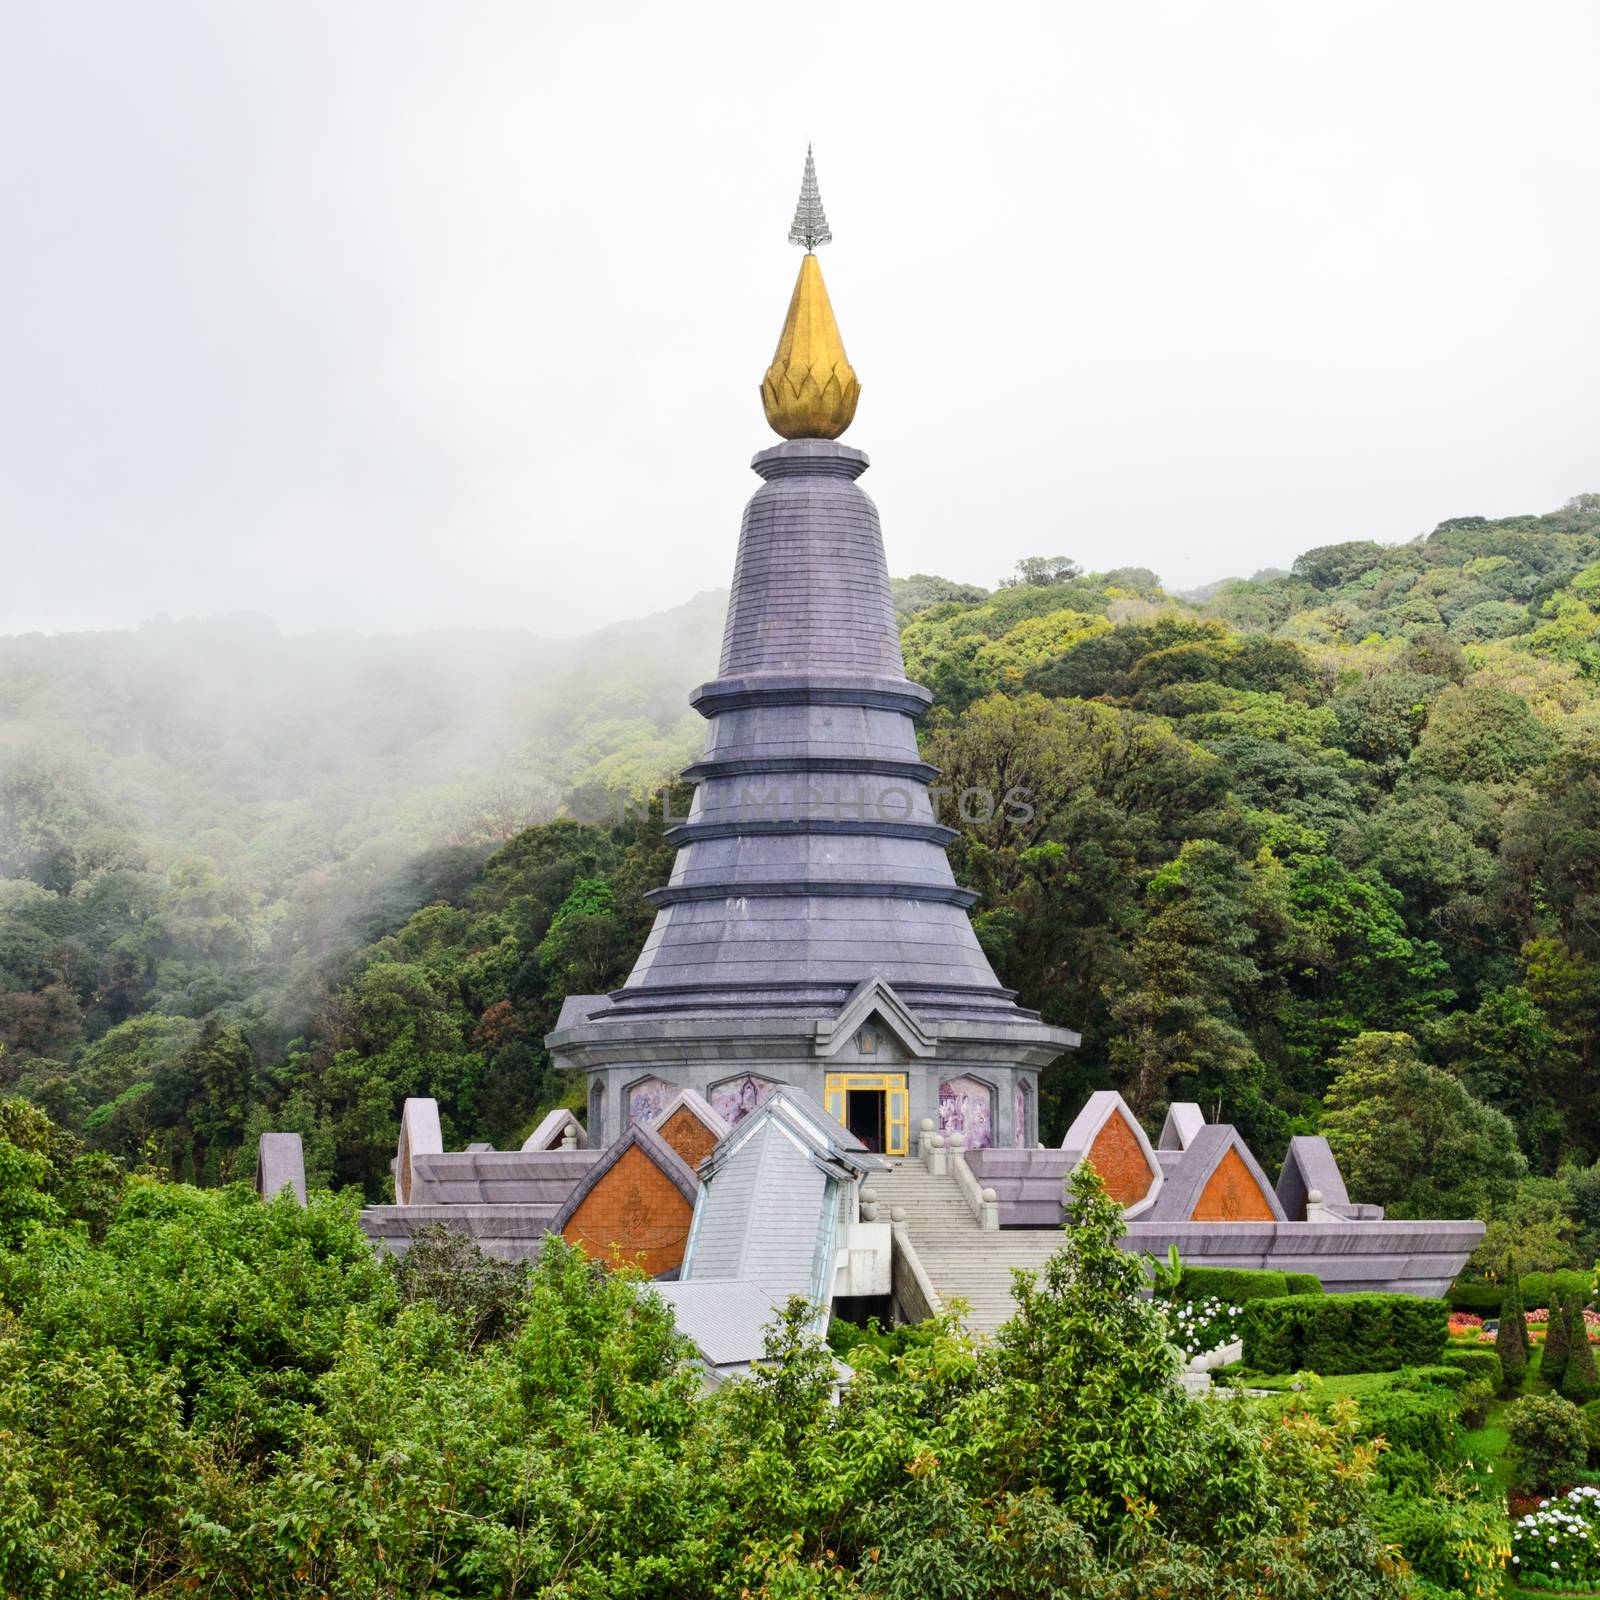 Phra Mahathat Napapolphumisiri pagoda on Doi Intanon mountain in Chiang Mai province of Thailand.